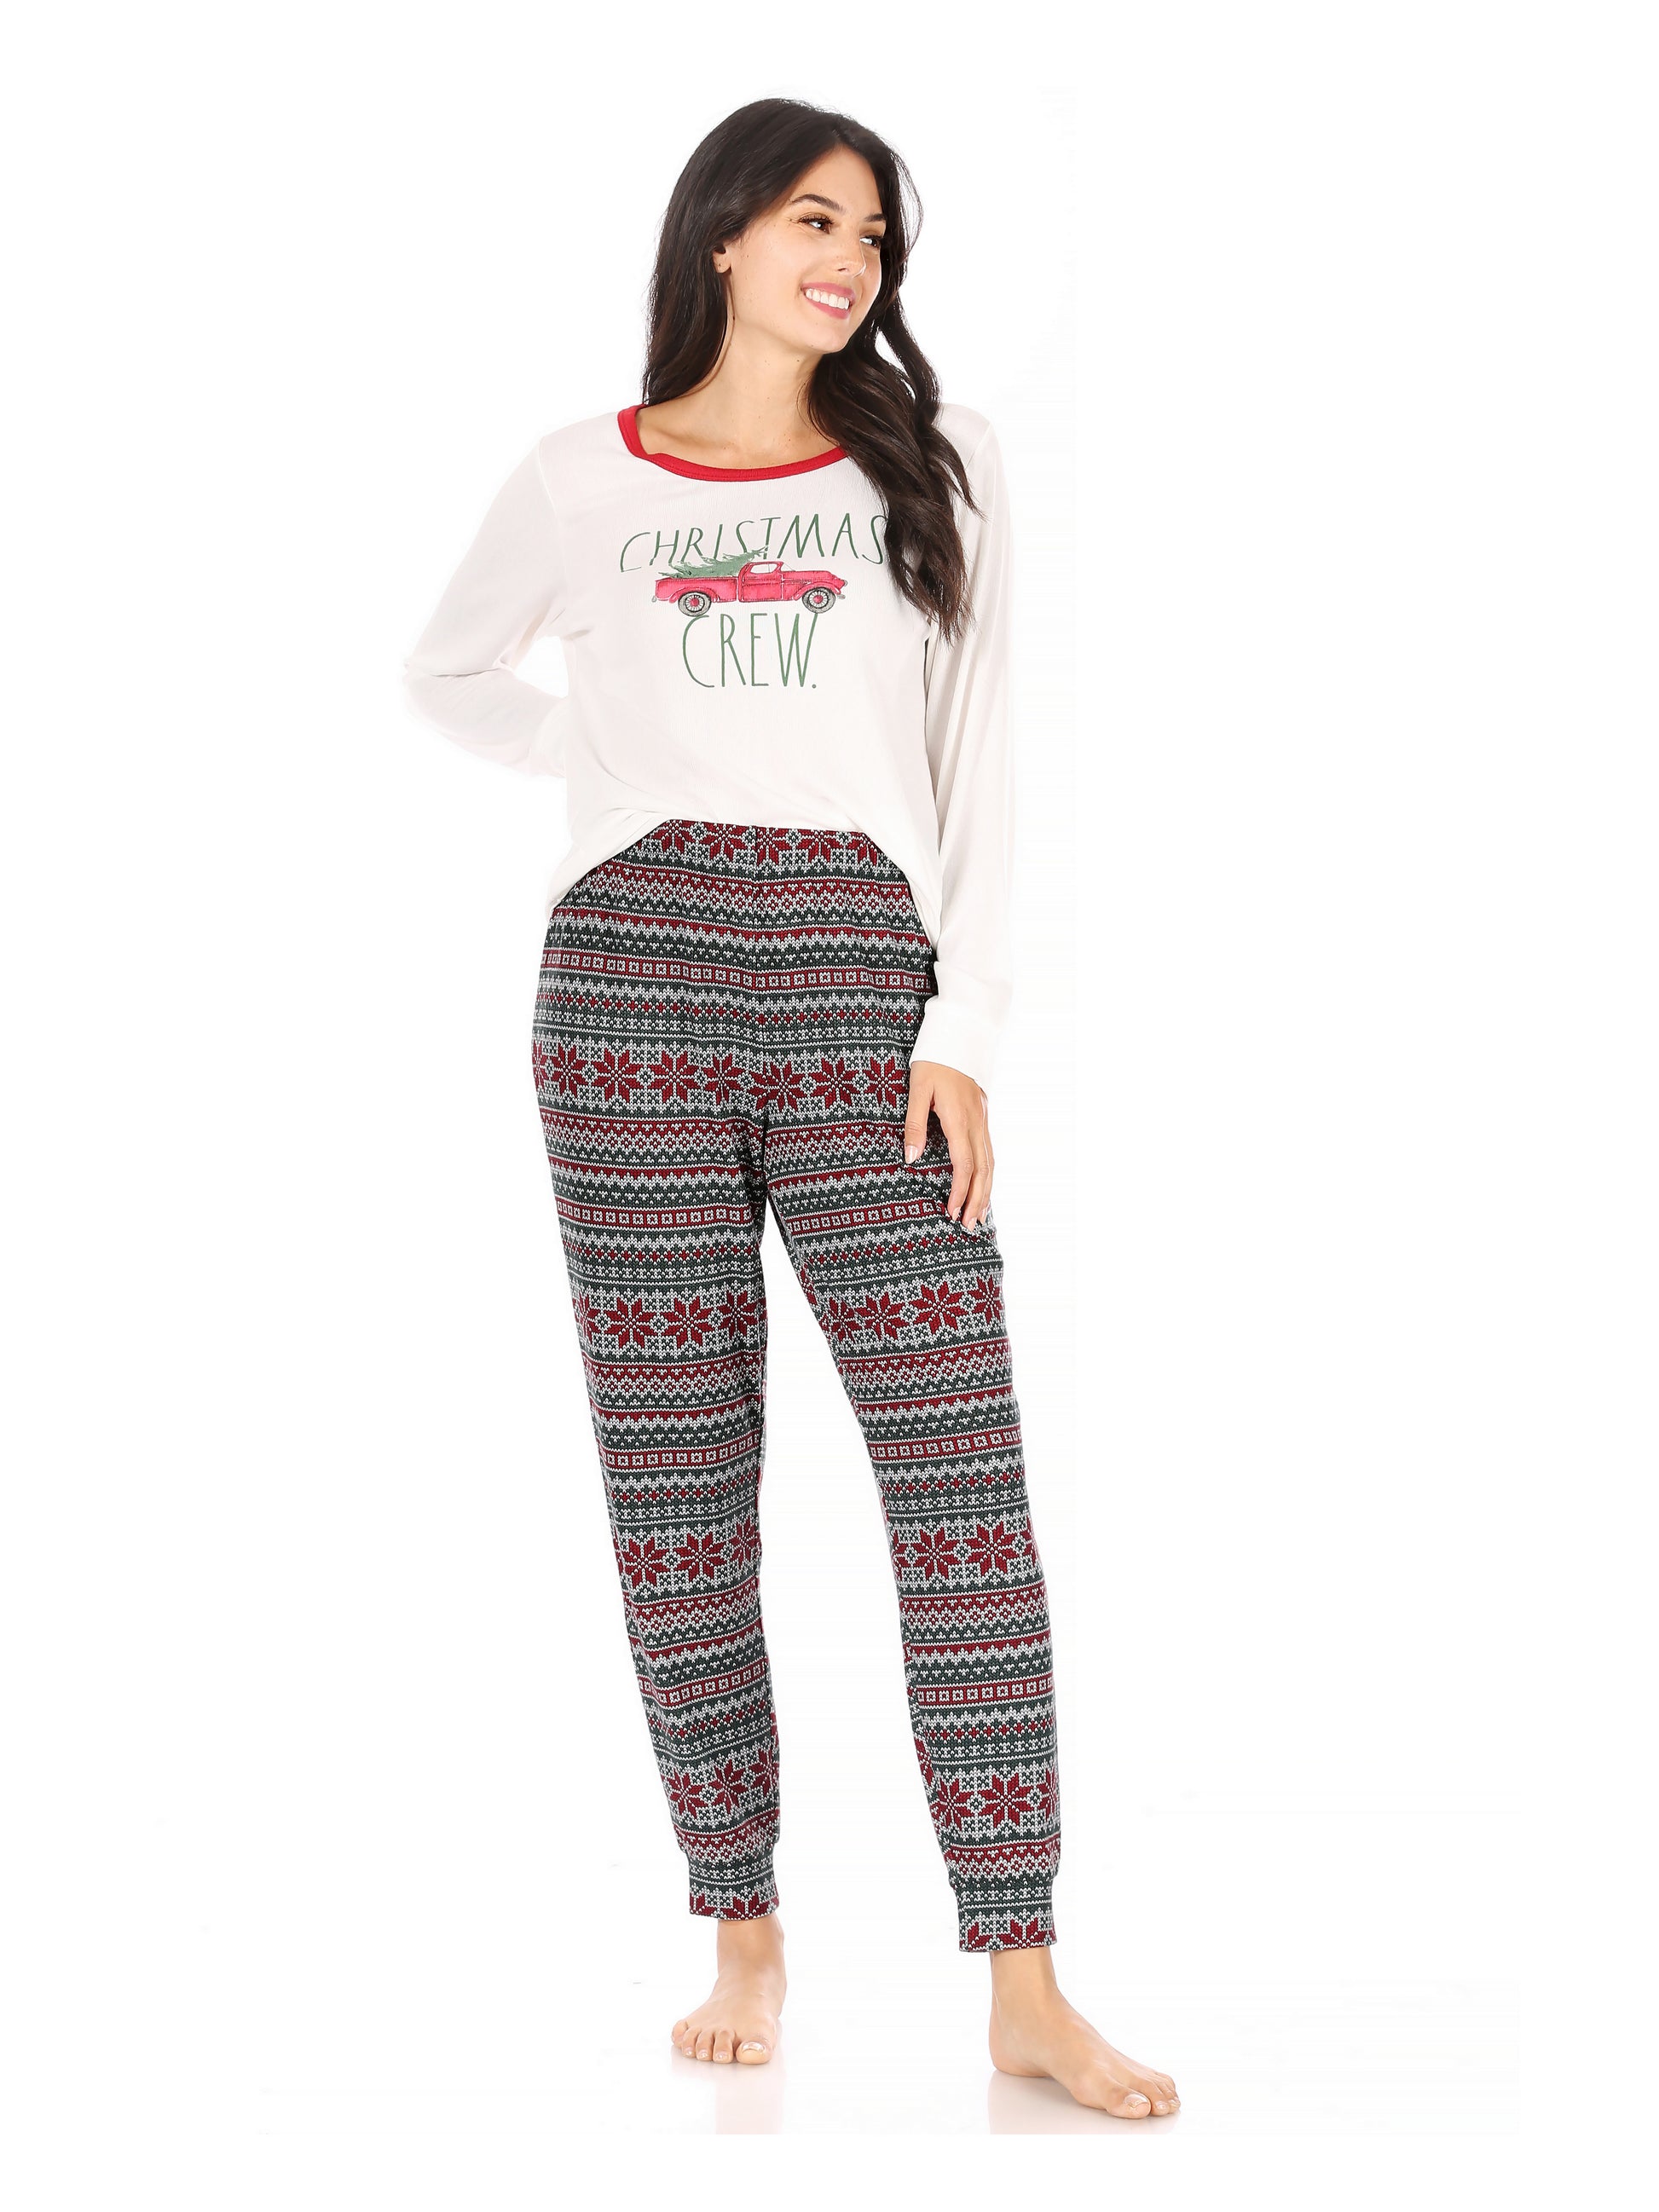 Women's "CHRISTMAS CREW" Long Sleeve Top and Jogger Pajama Set - Rae Dunn Wear - W Pants Set